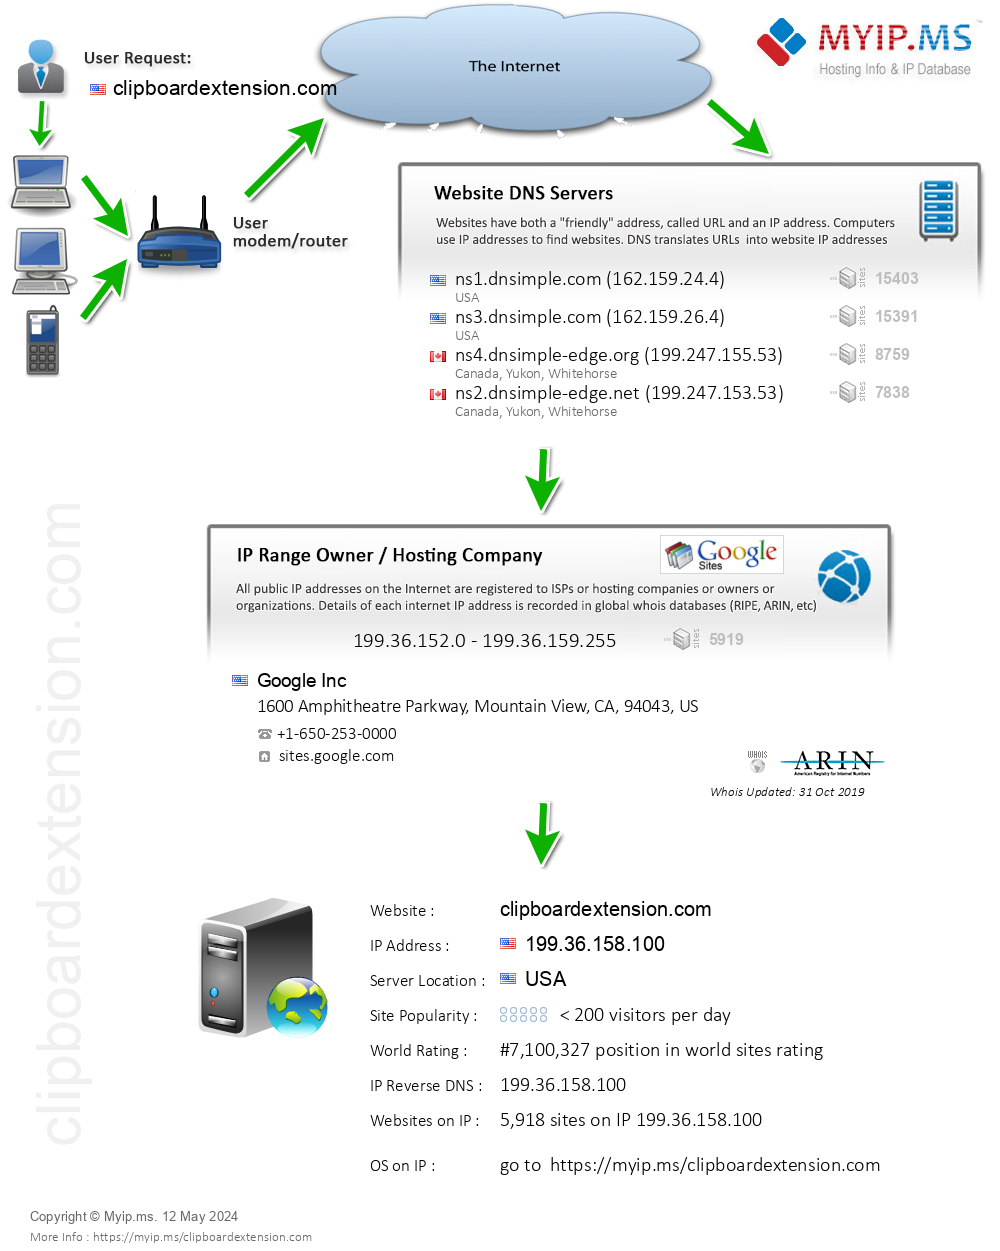 Clipboardextension.com - Website Hosting Visual IP Diagram